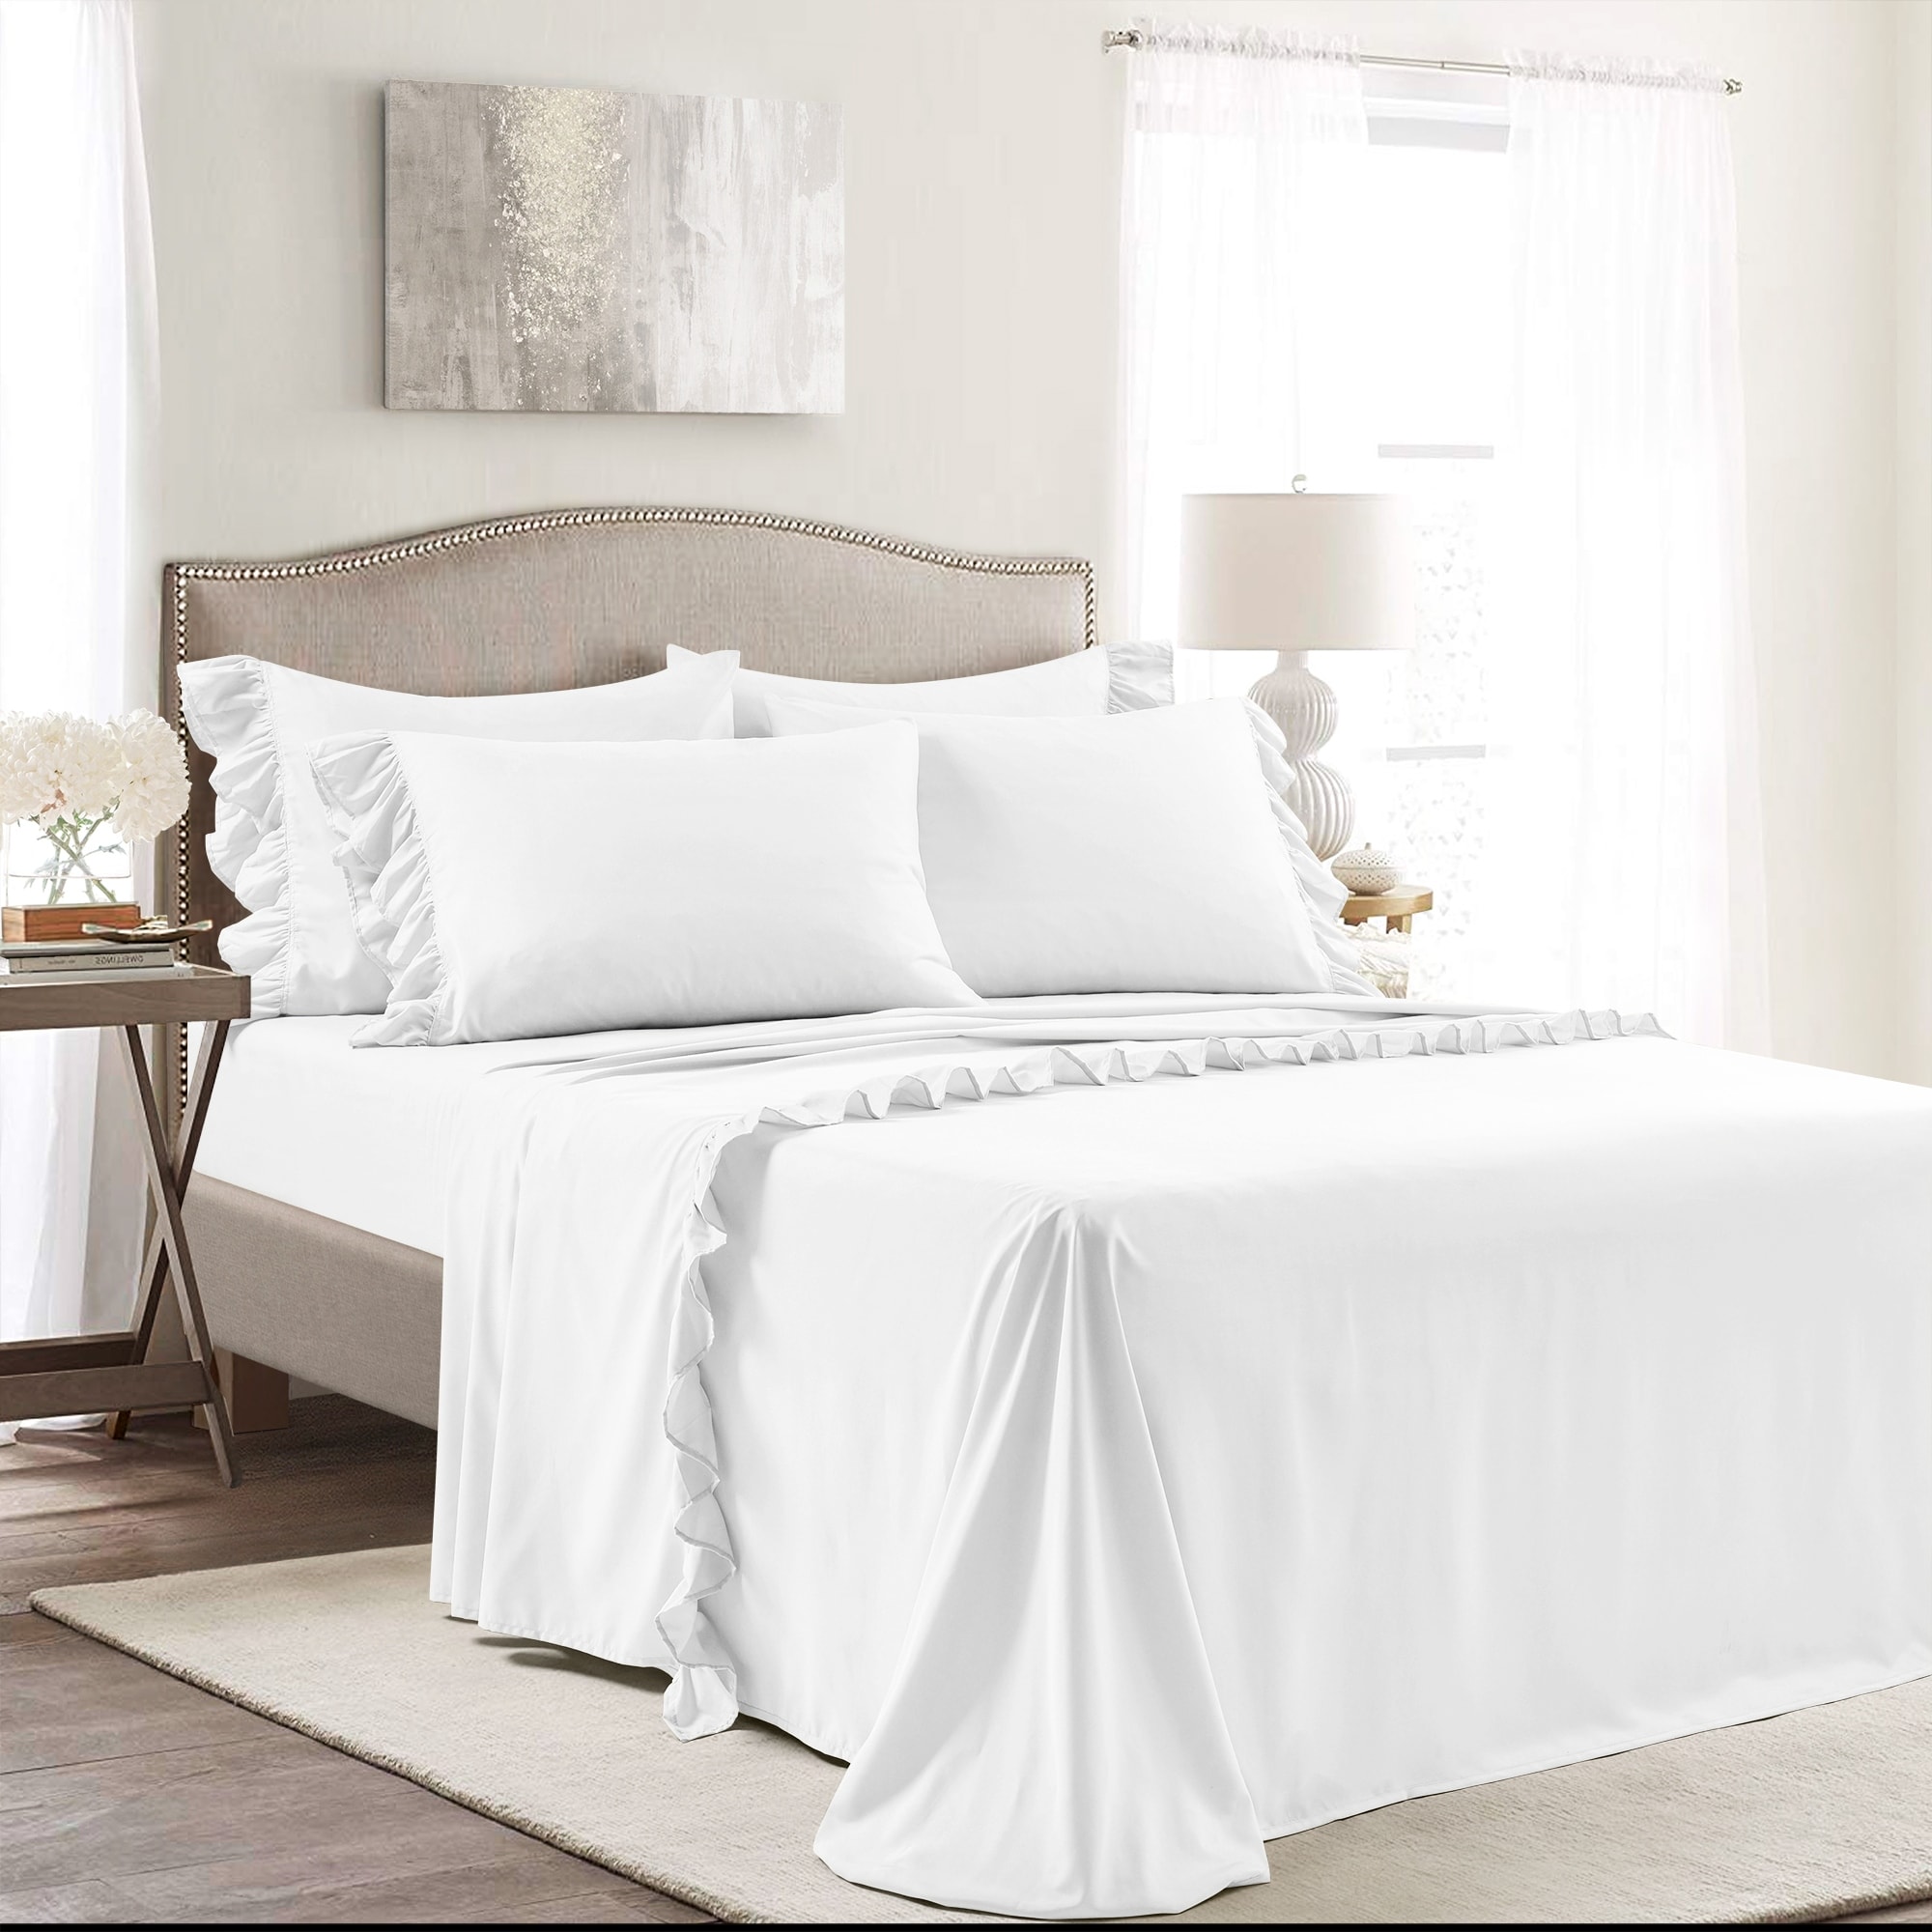 Teen & Dorm Lush Decor Bed Sheet Sets - Bed Bath & Beyond